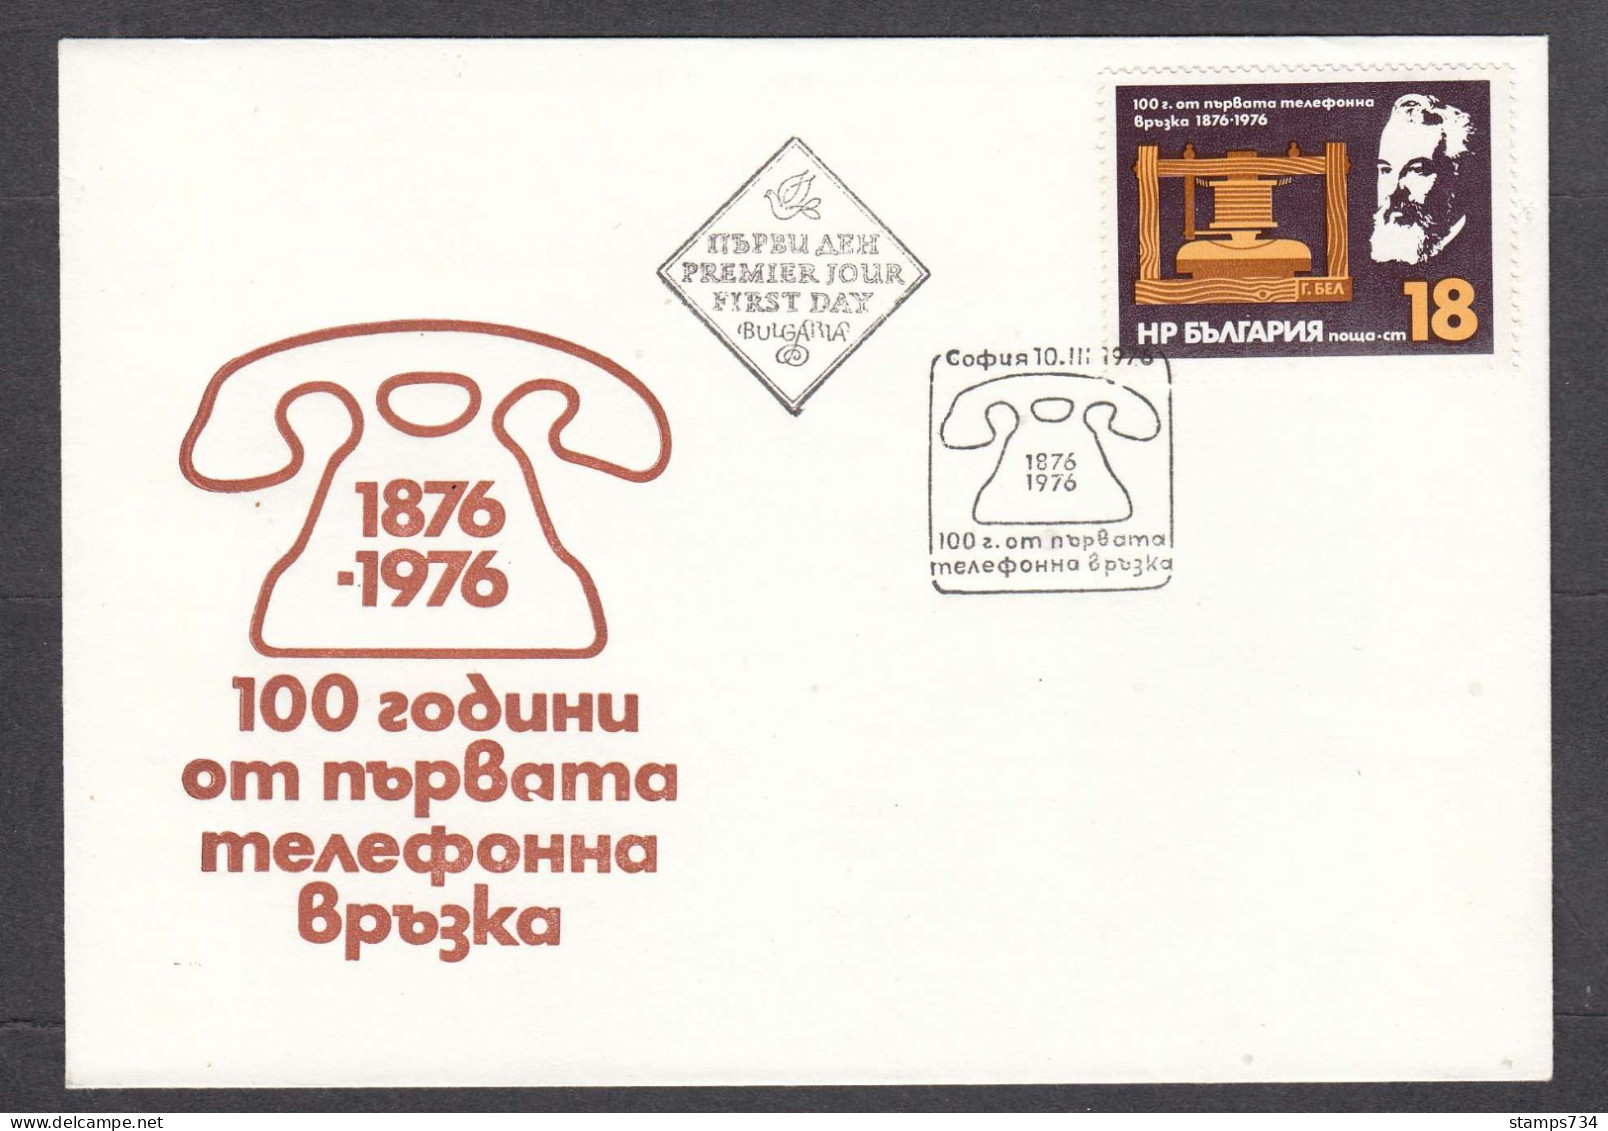 Bulgaria 1976 - 100 Years Phone (Al. Graham Bell), Mi-Nr. 2480, FDC - FDC